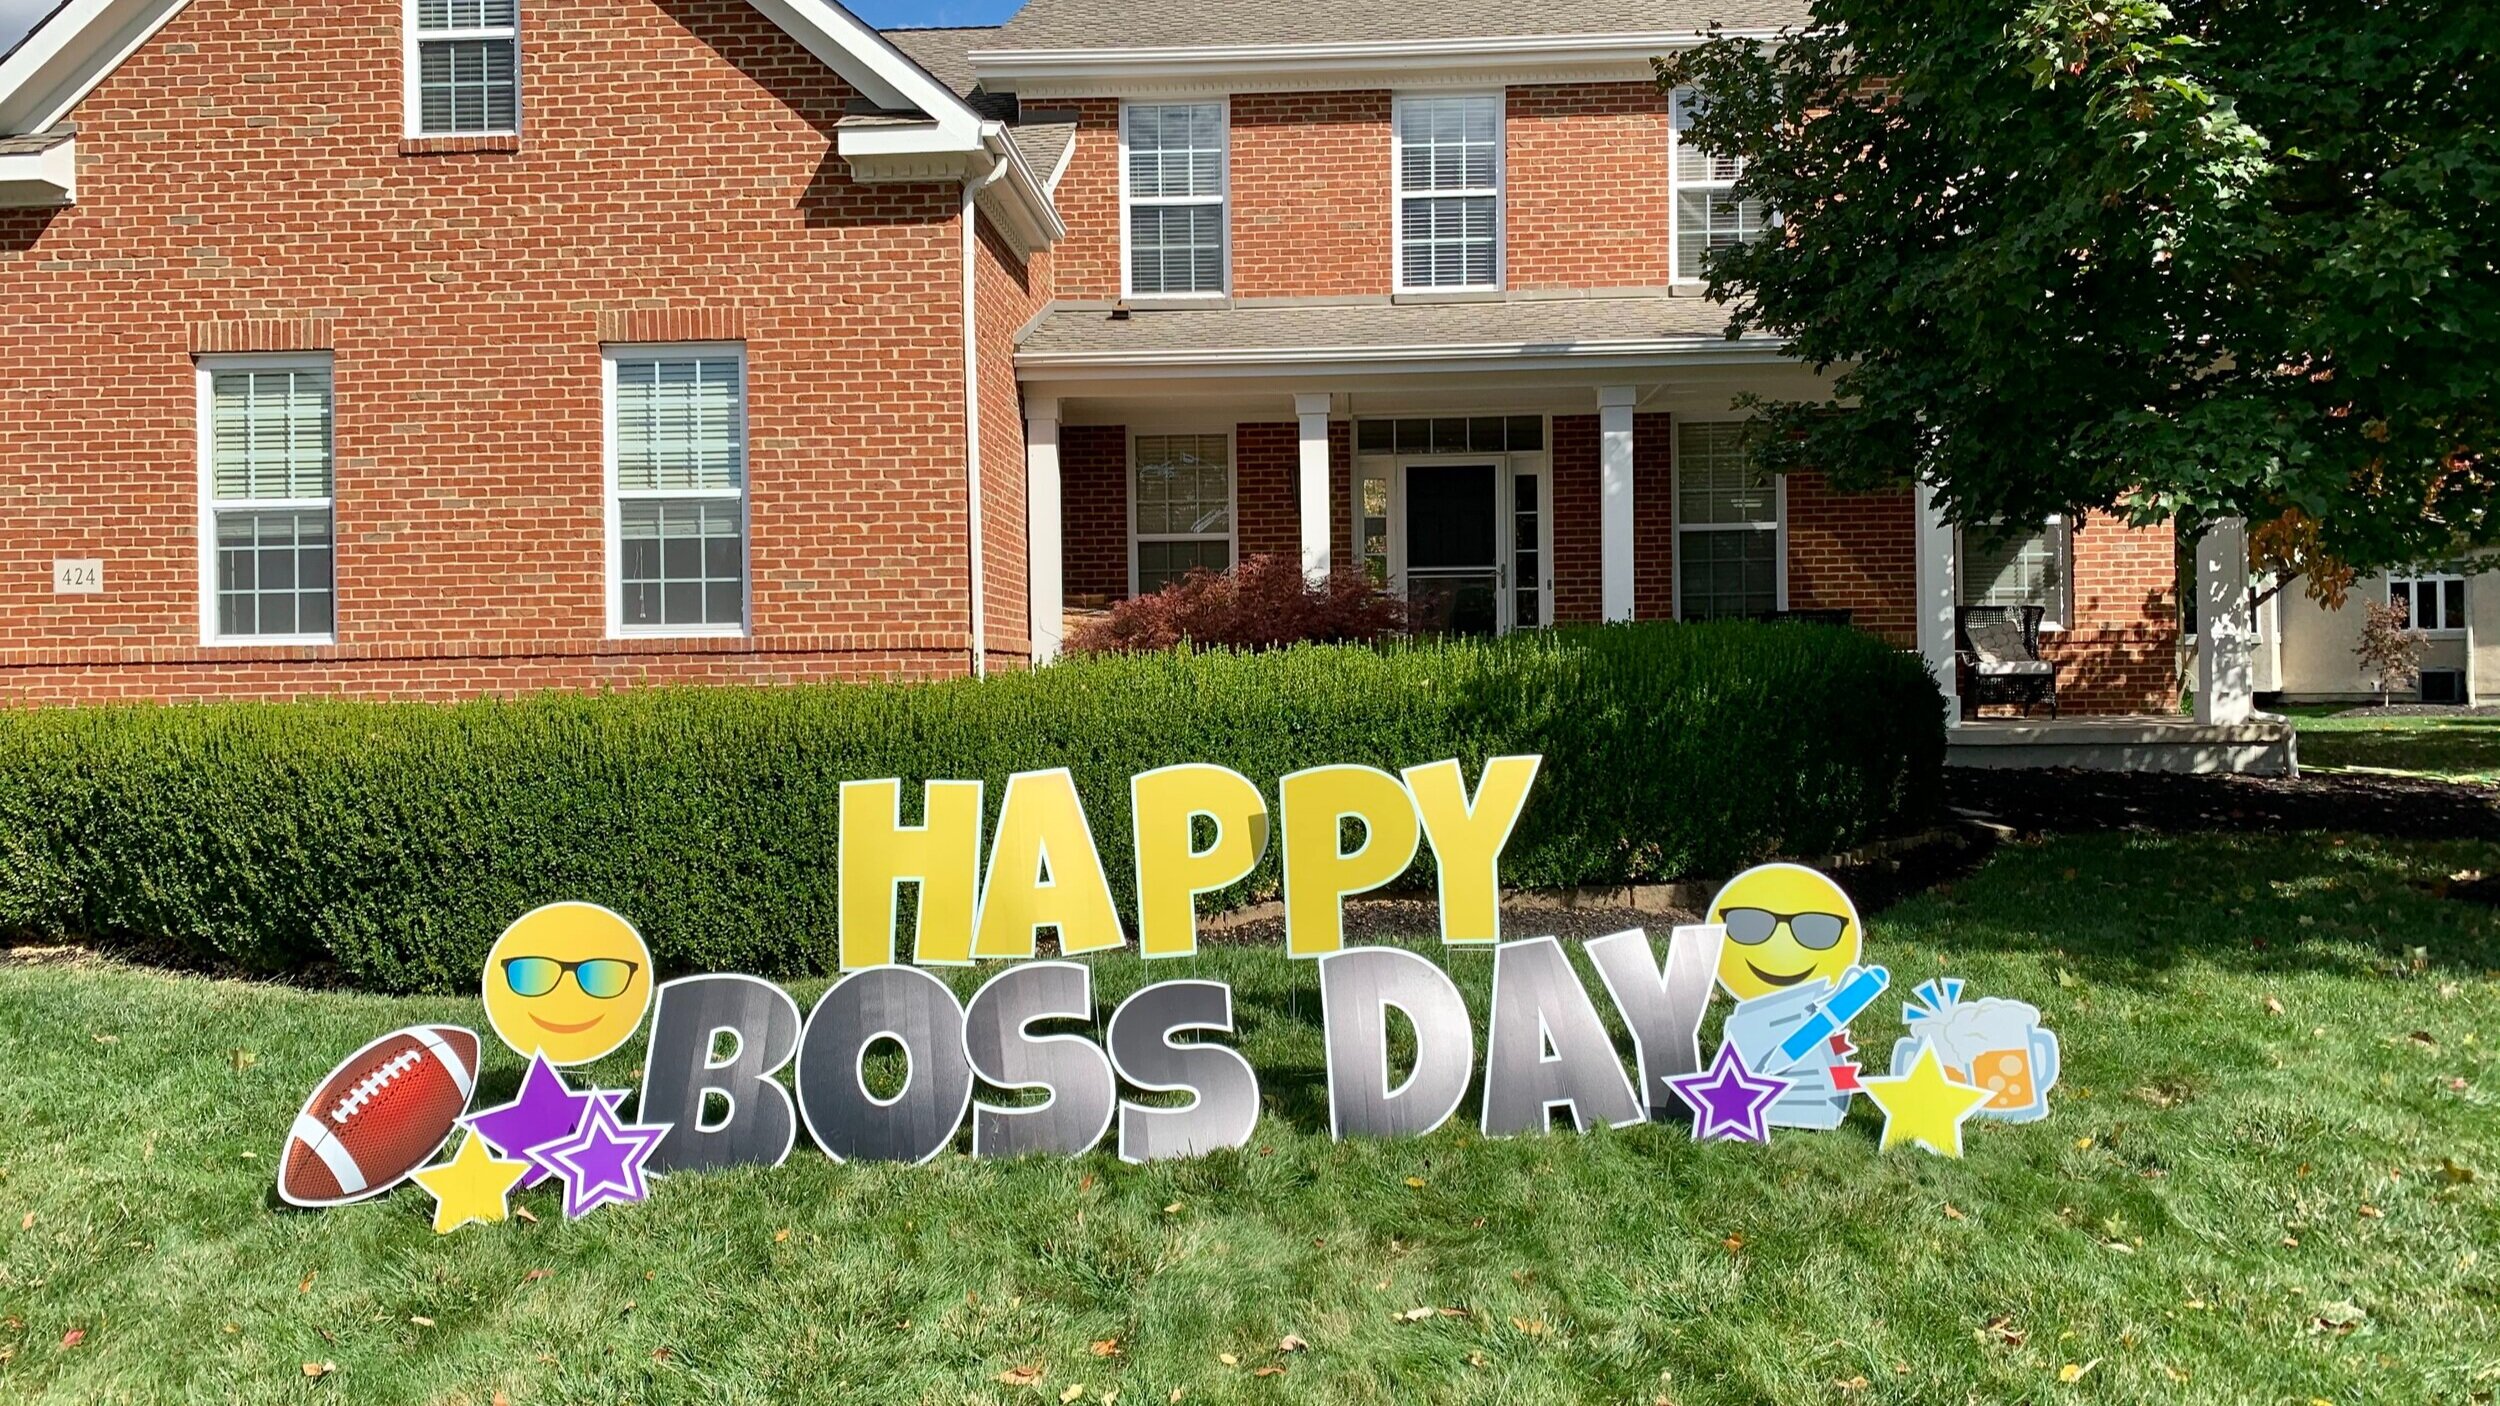 Happy Boss' Day